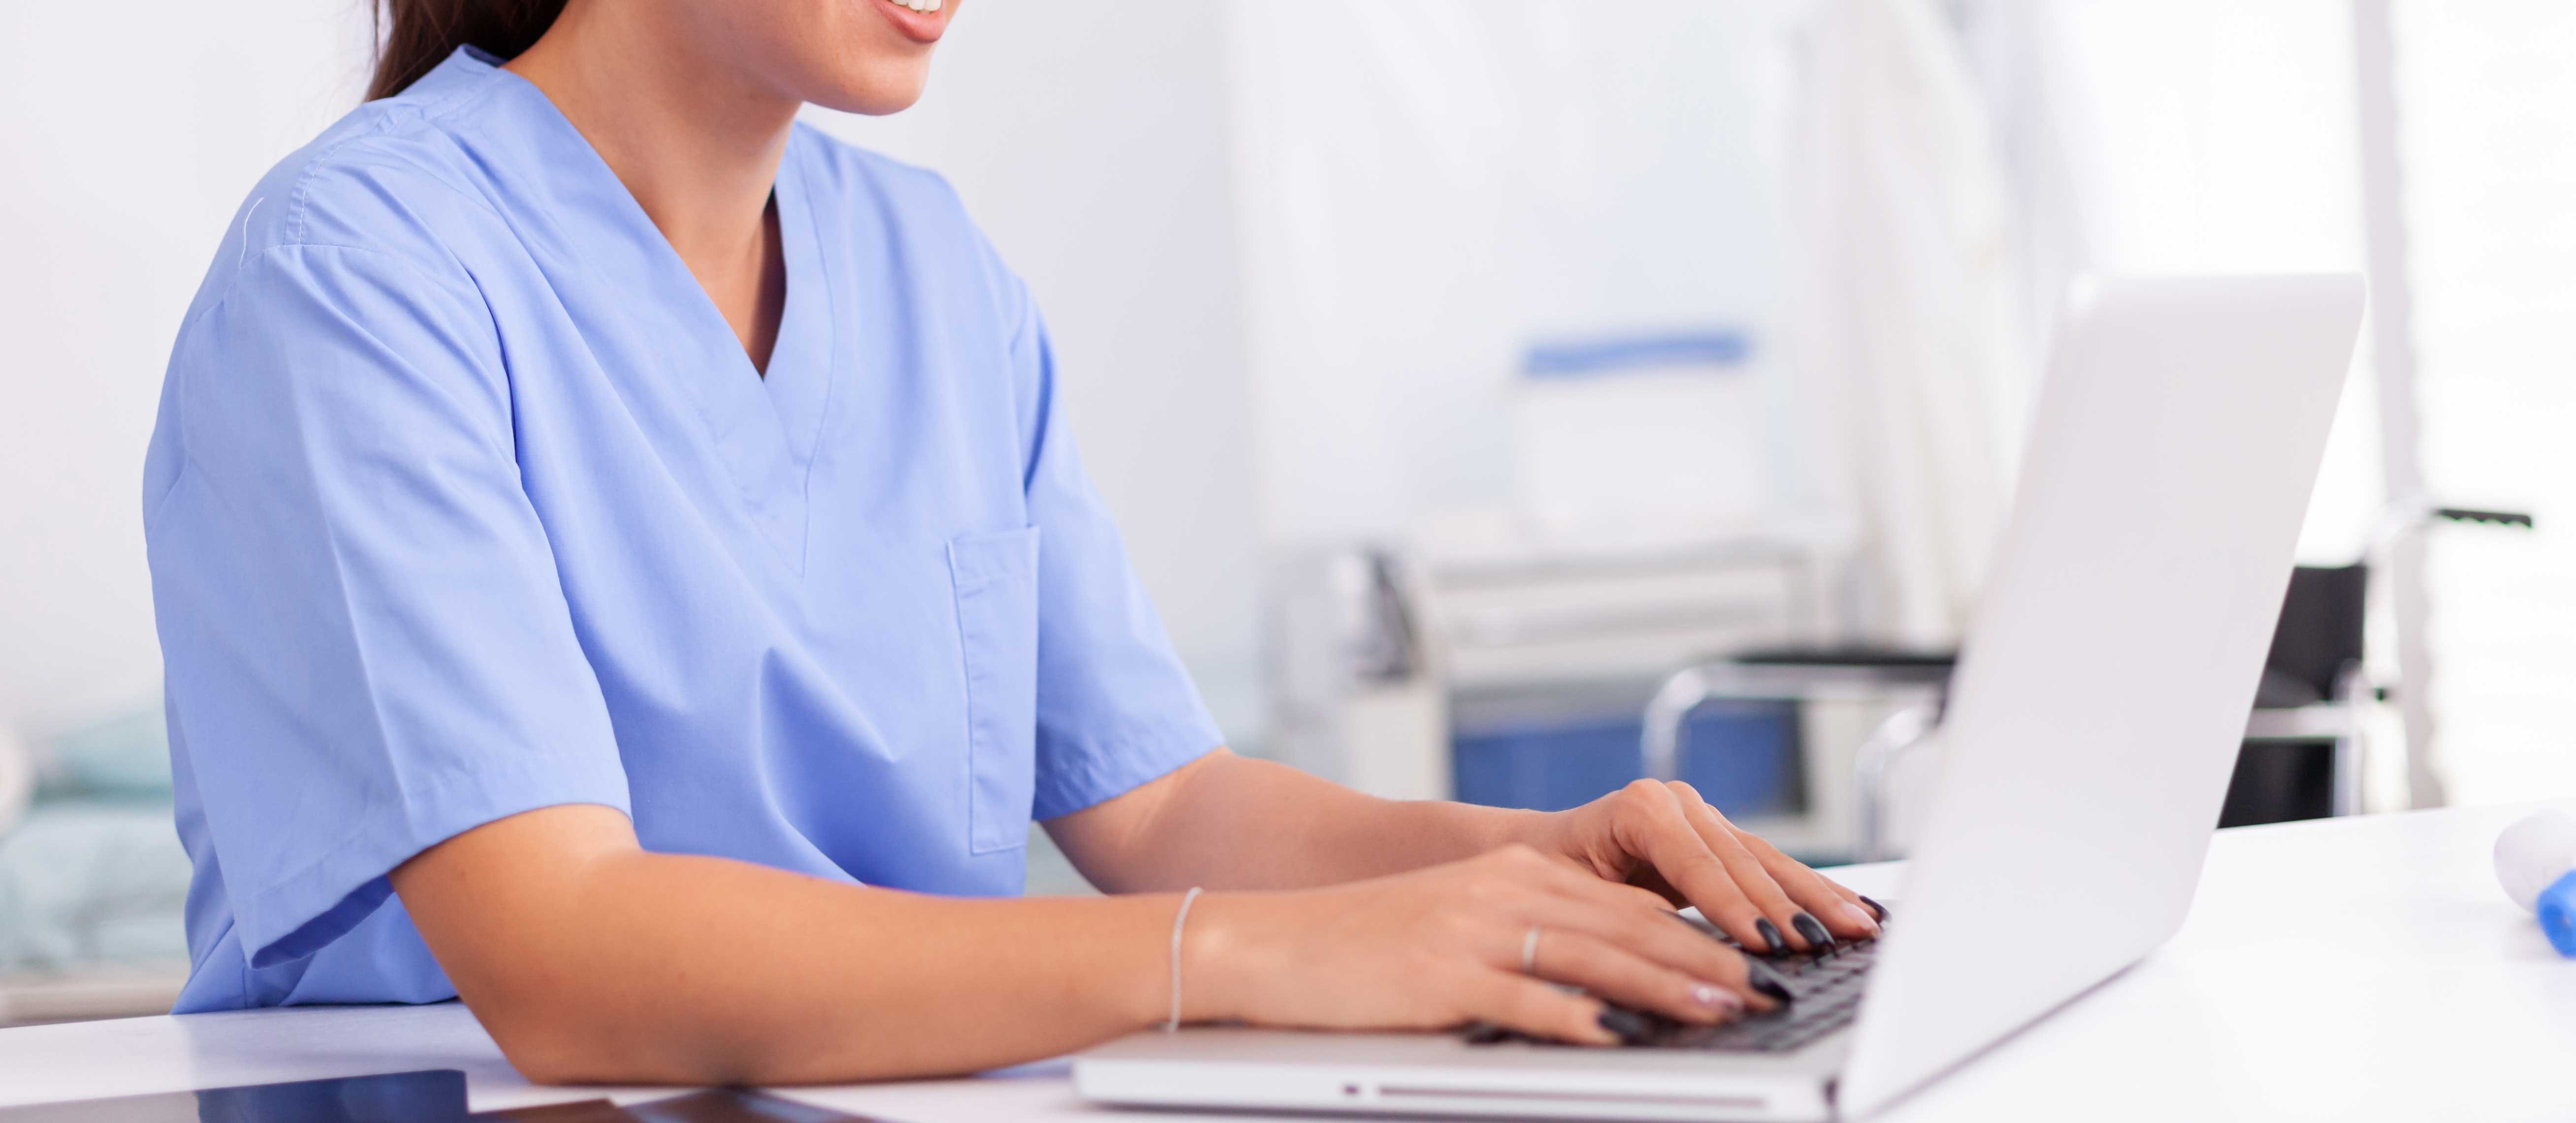 medical-nurse-uniform-using-laptop-sitting-desk-hospital-office-health-care-physician-using-computer-modern-clinic-looking-monitor-medicine-profession-scrubs